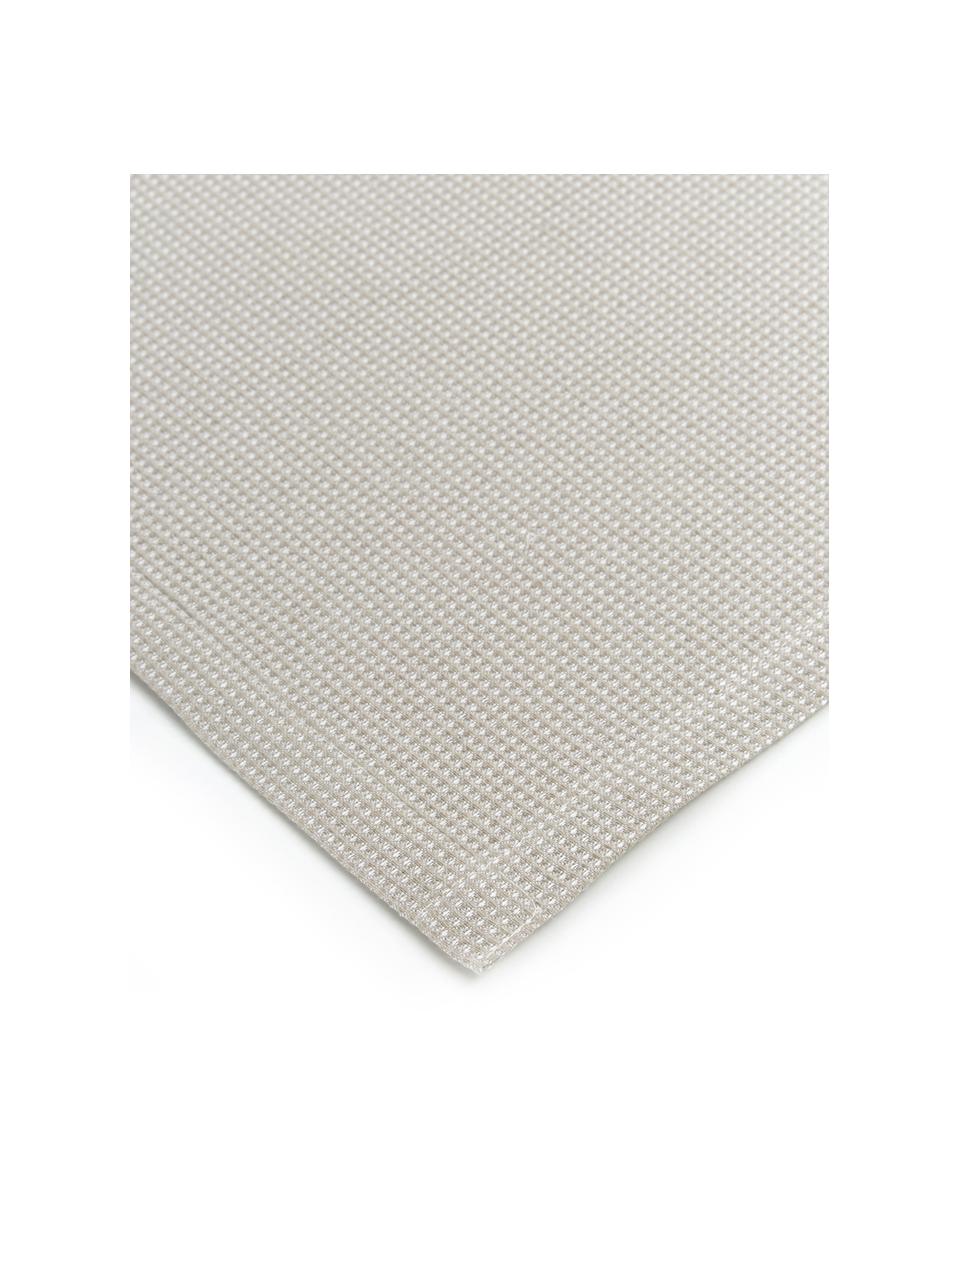 Camino de mesa en tejido gofre Kubo, 65% algodón, 35% poliéster, Gris pardo, An 40 x L 145 cm